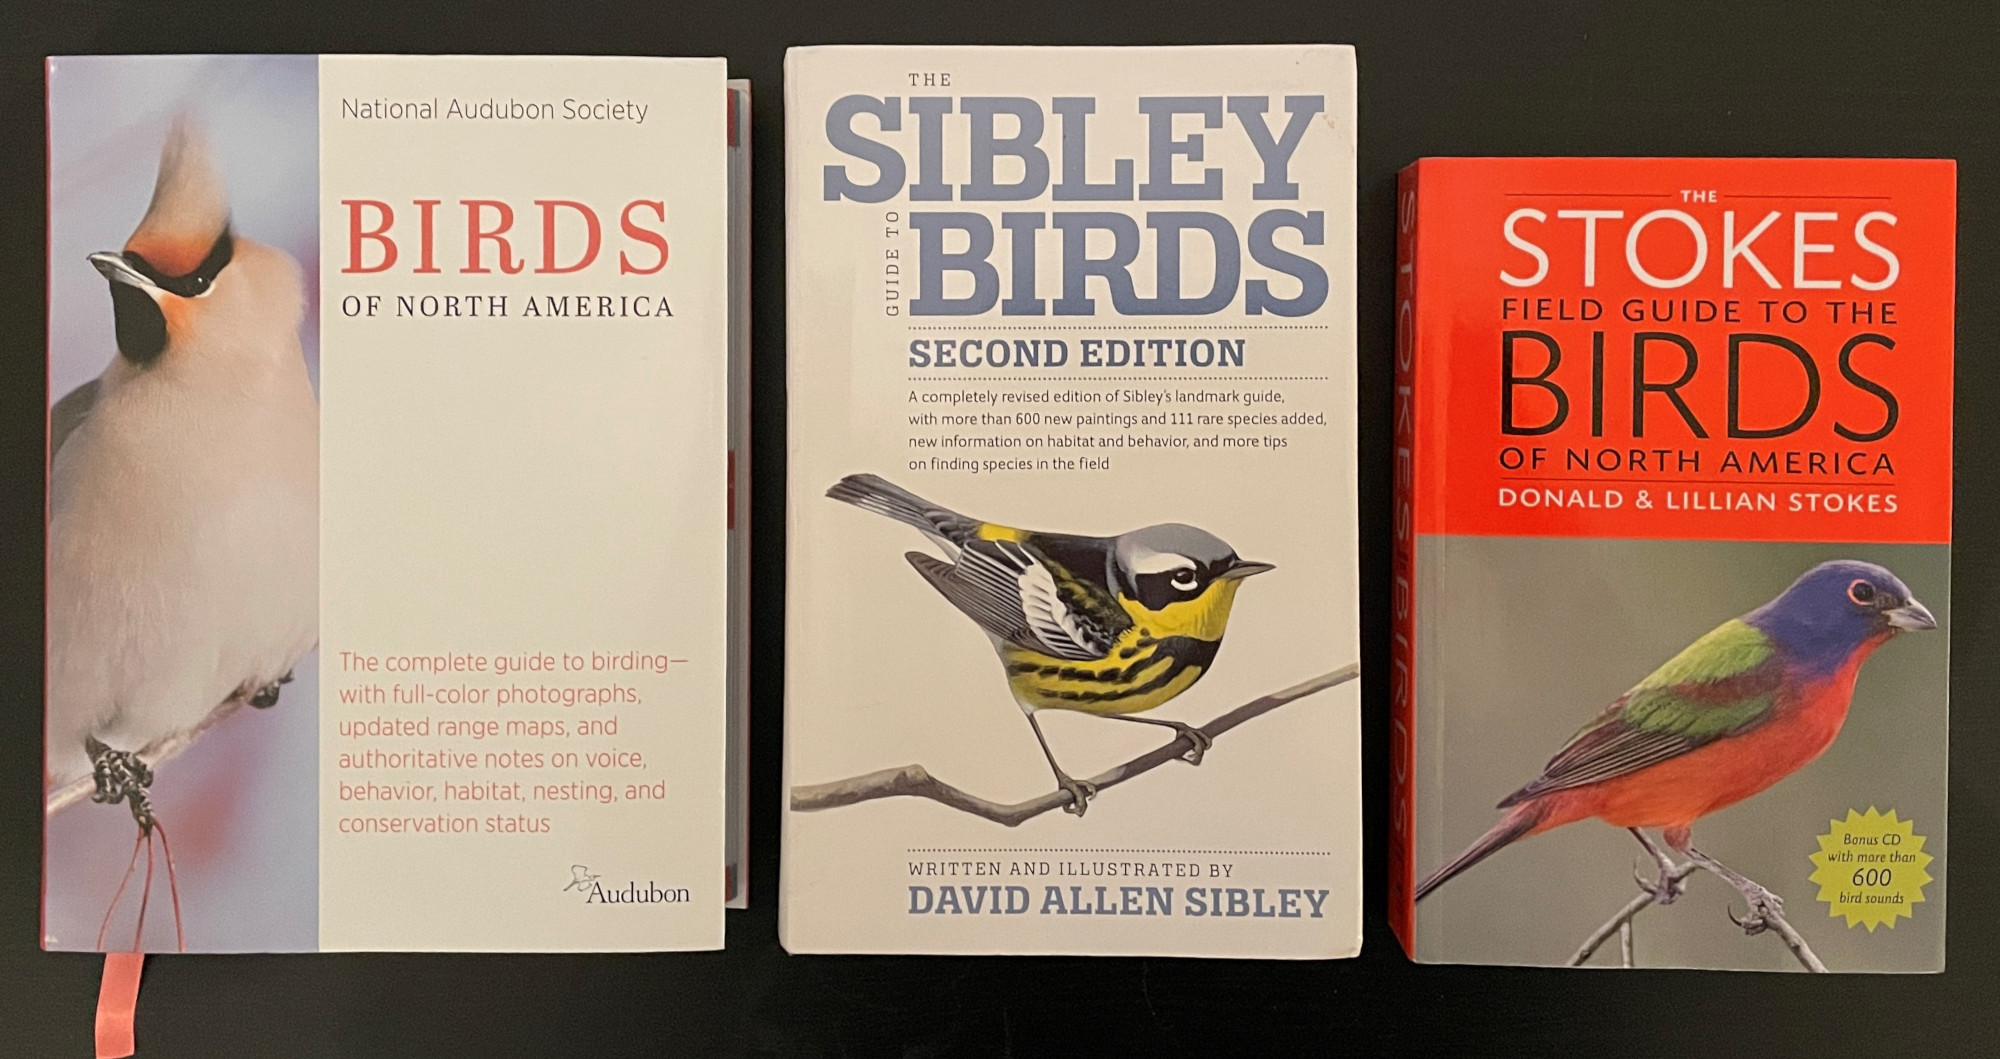 Review: National Audubon Society Birds of North America